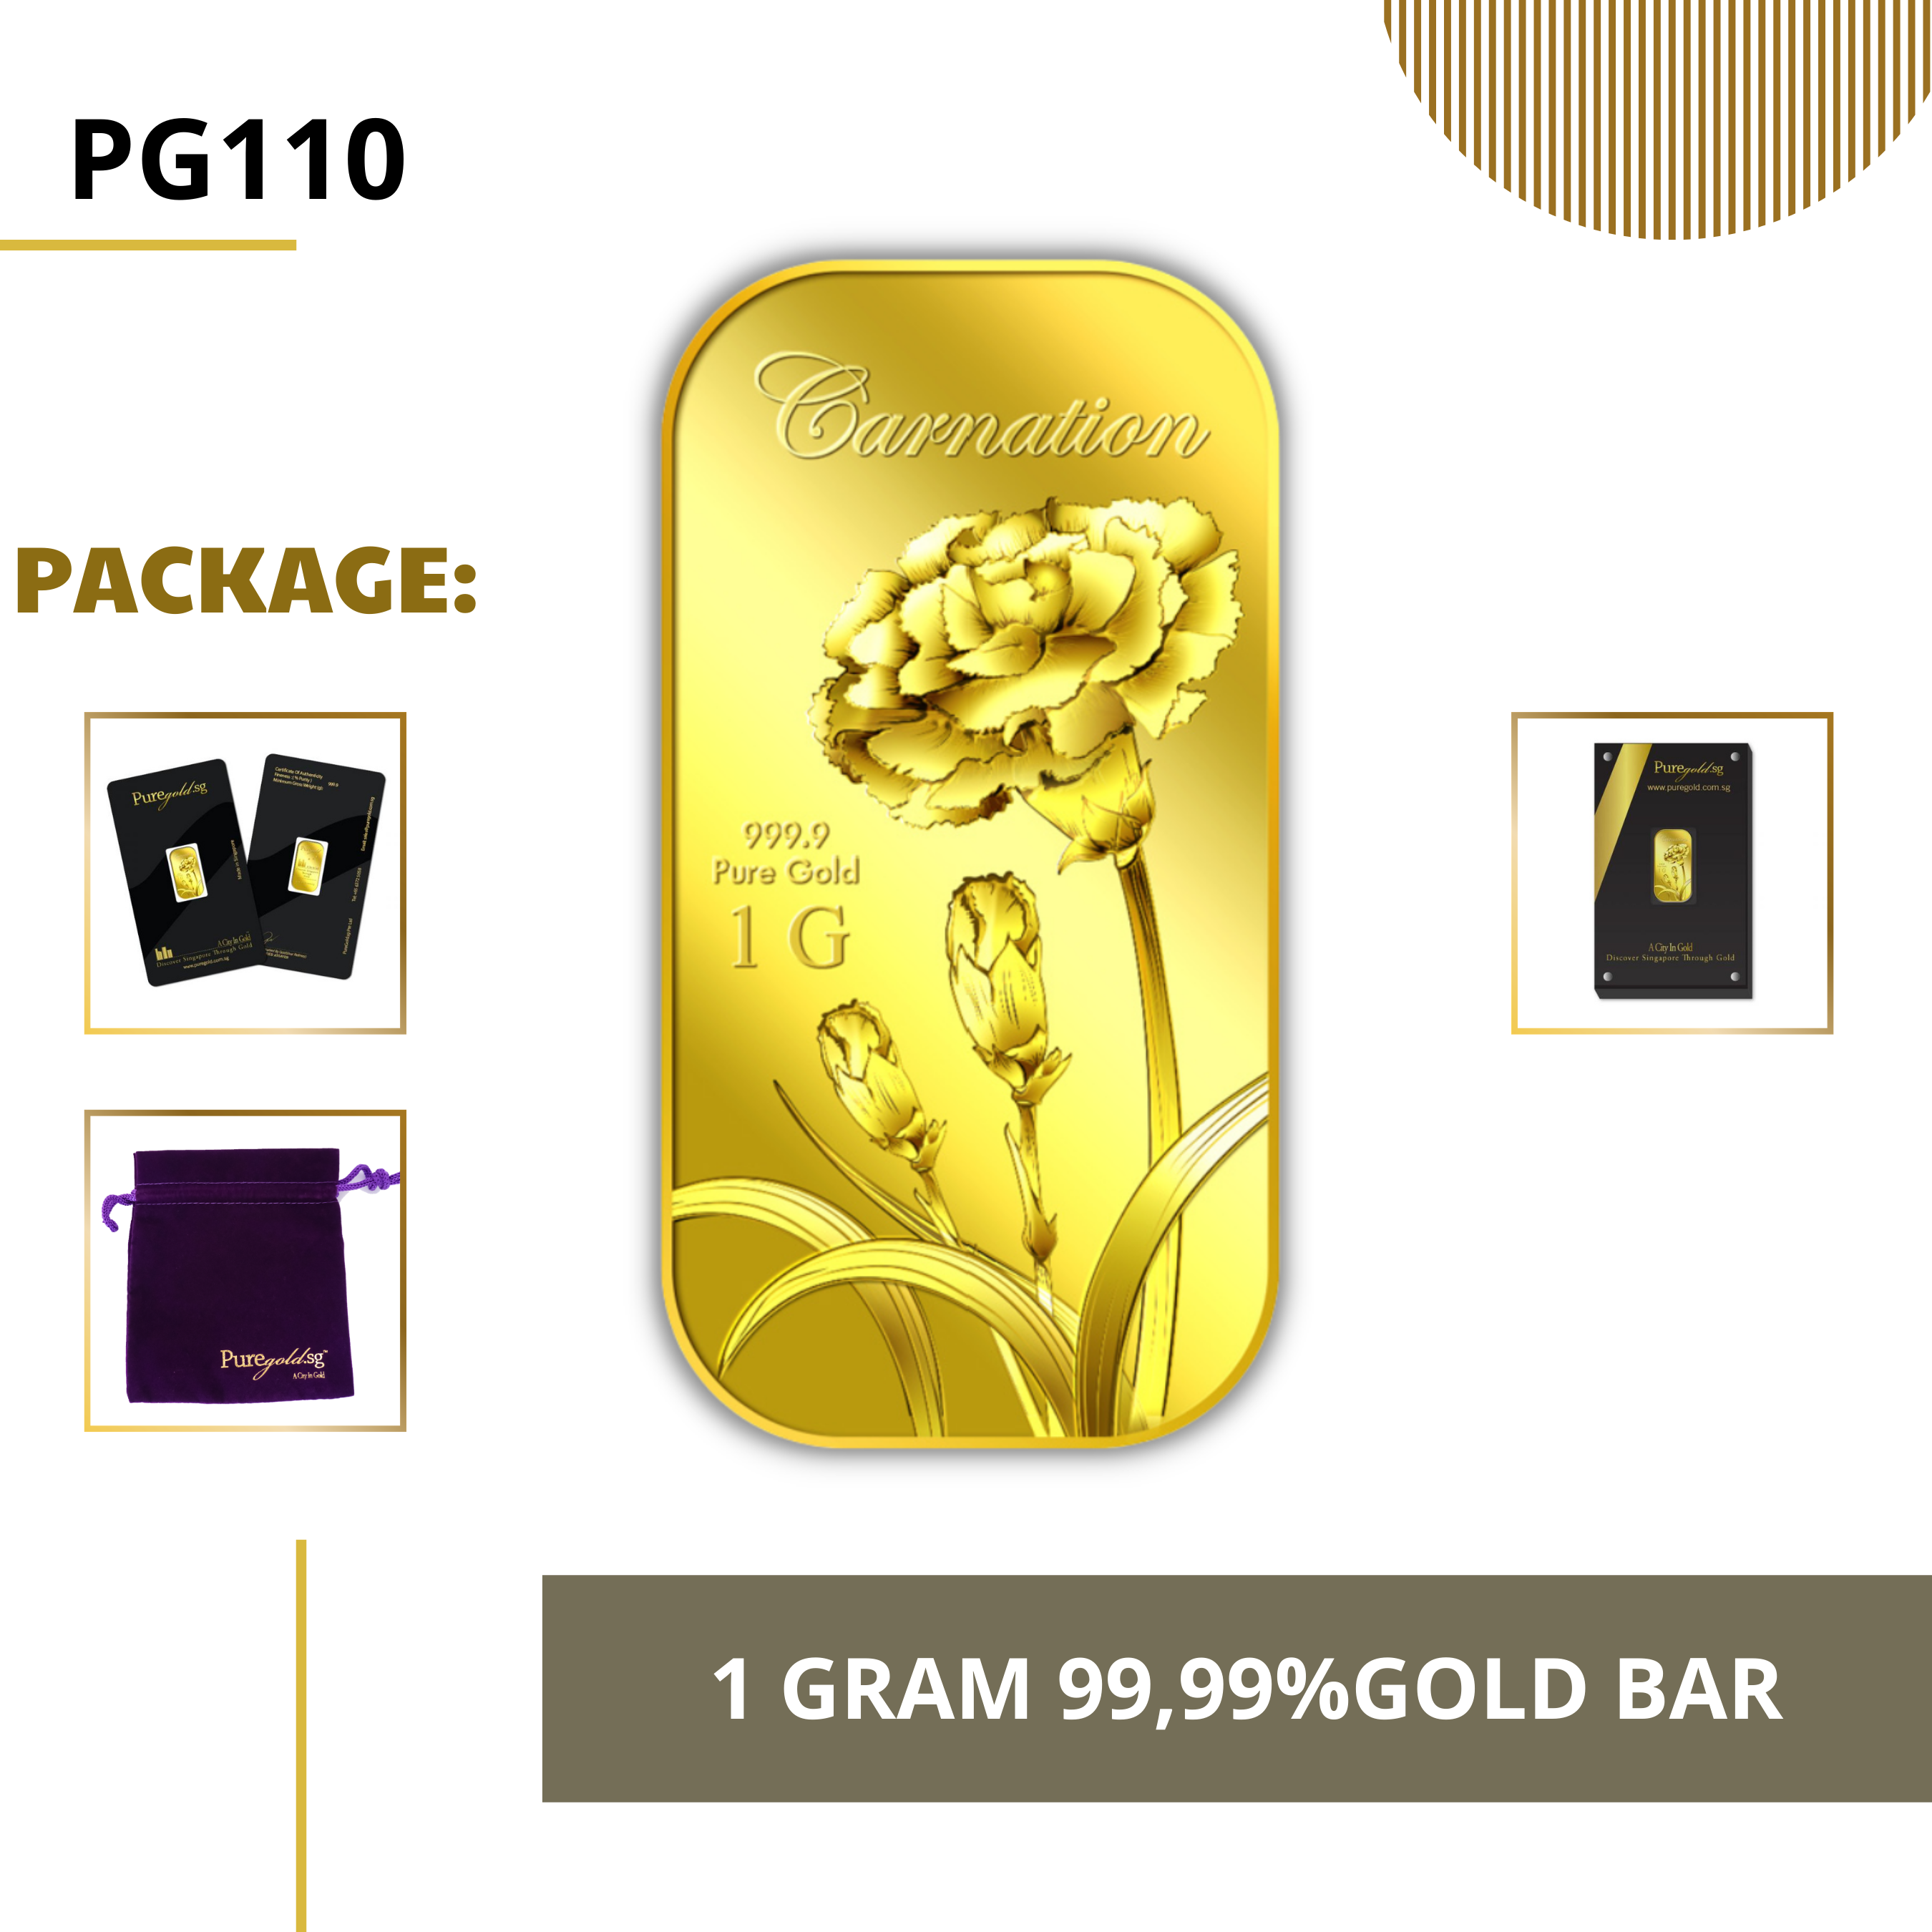 PURE GOLD 99.99% ทองคำแท่ง / 1Gram Carnation gold bar/ ทองคำแท้จากสิงคโปร์ / ทองคำ 1 กรัม / ทอง 99.99% *การันตีทองแท้*